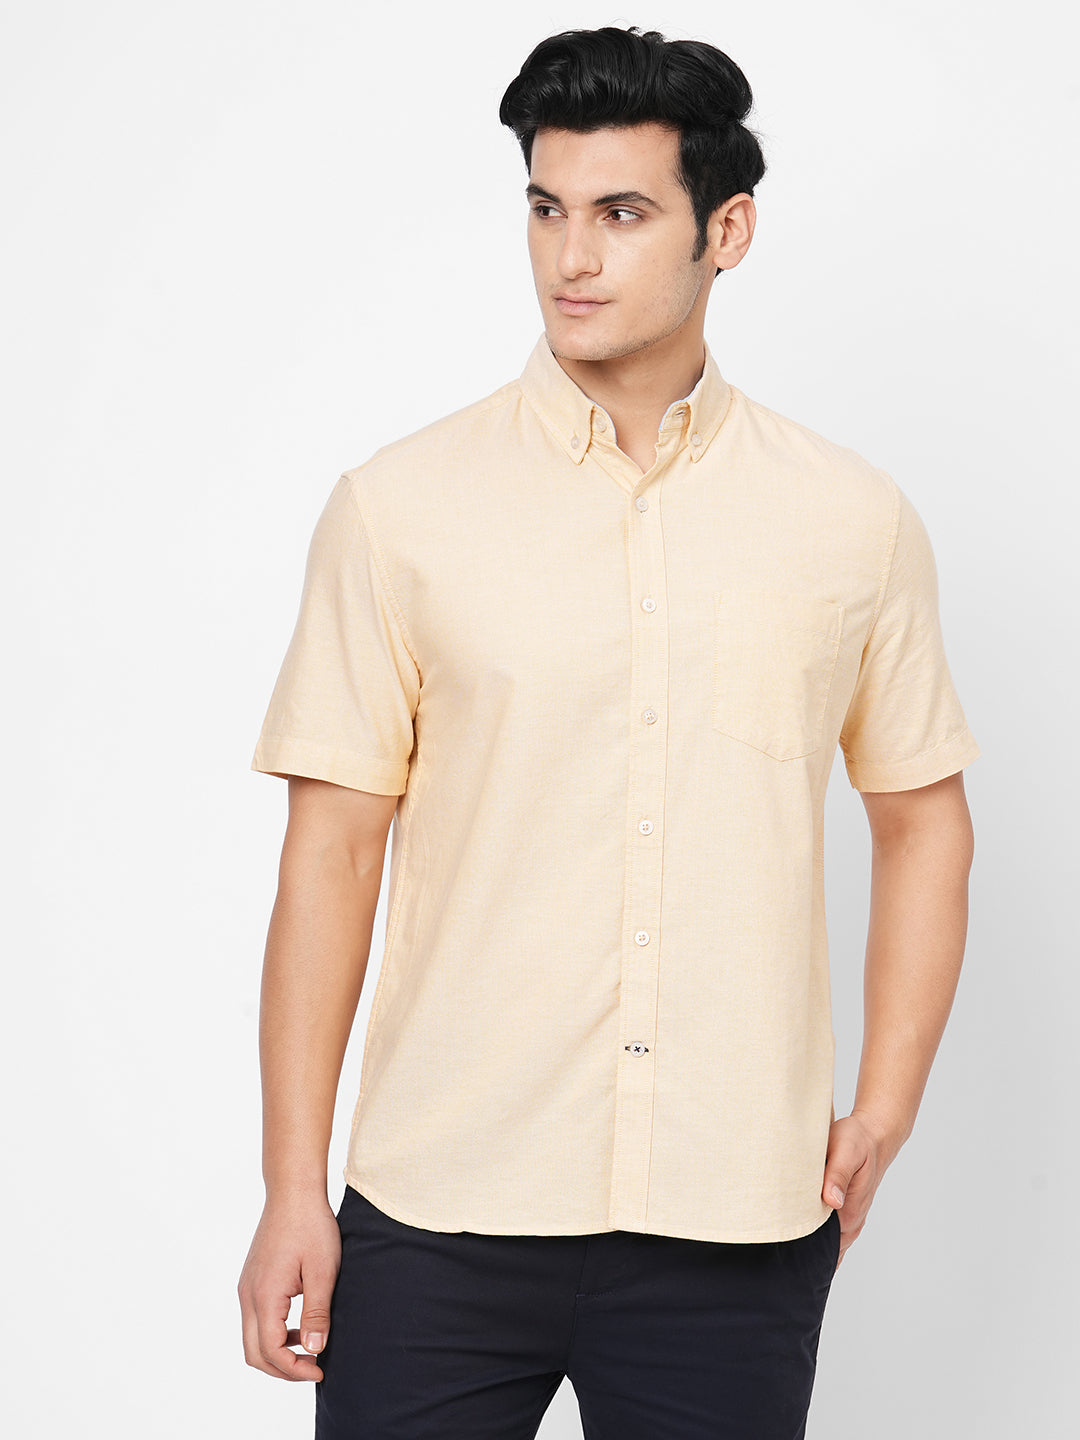 Men's Yellow Oxford Cotton Button down Collar Short Sleeved Shirt